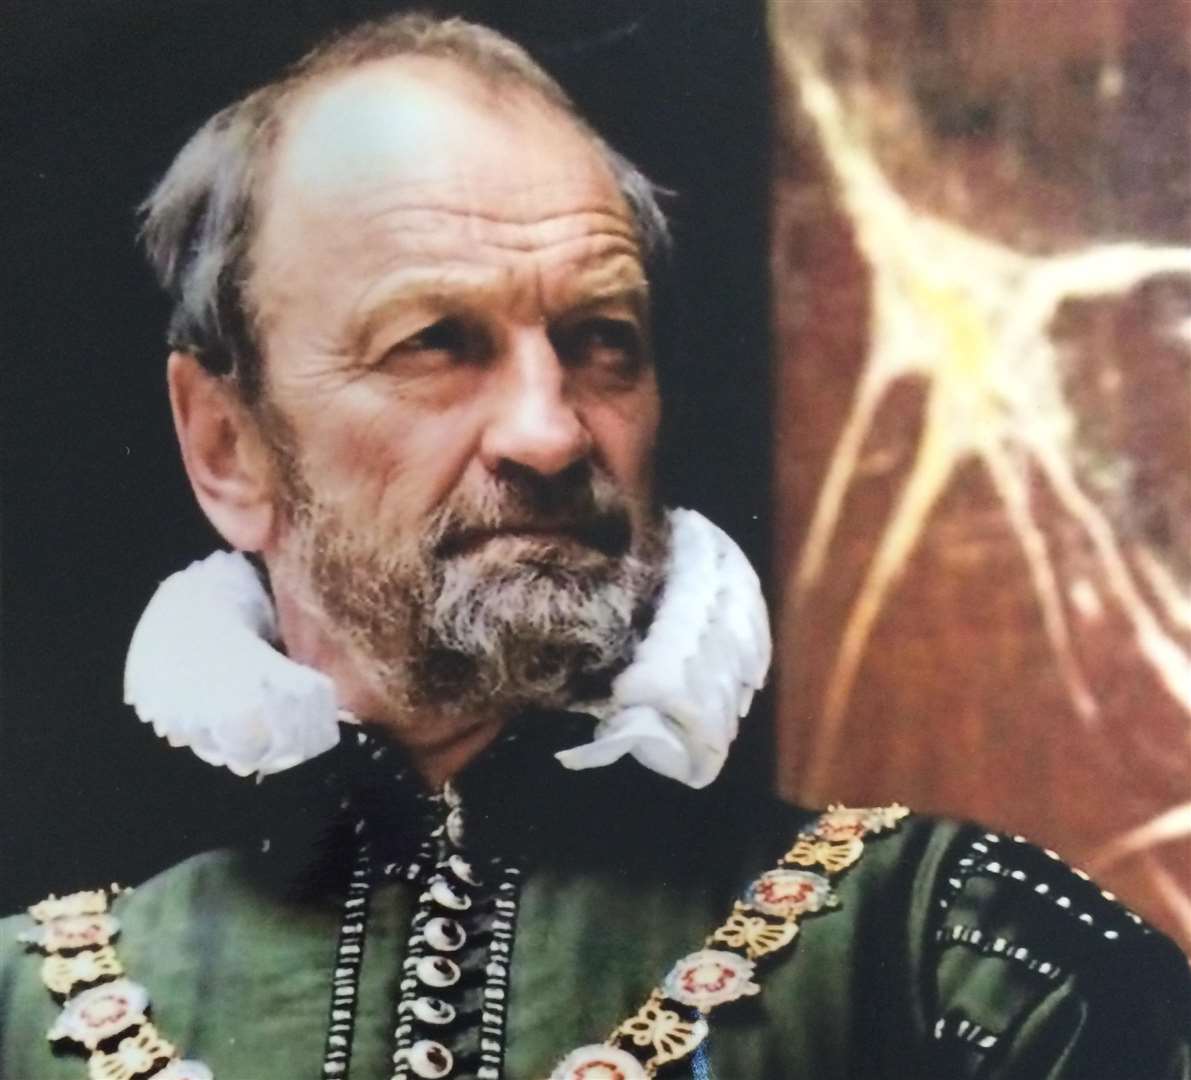 John McEnery is a former Shakespearean actor